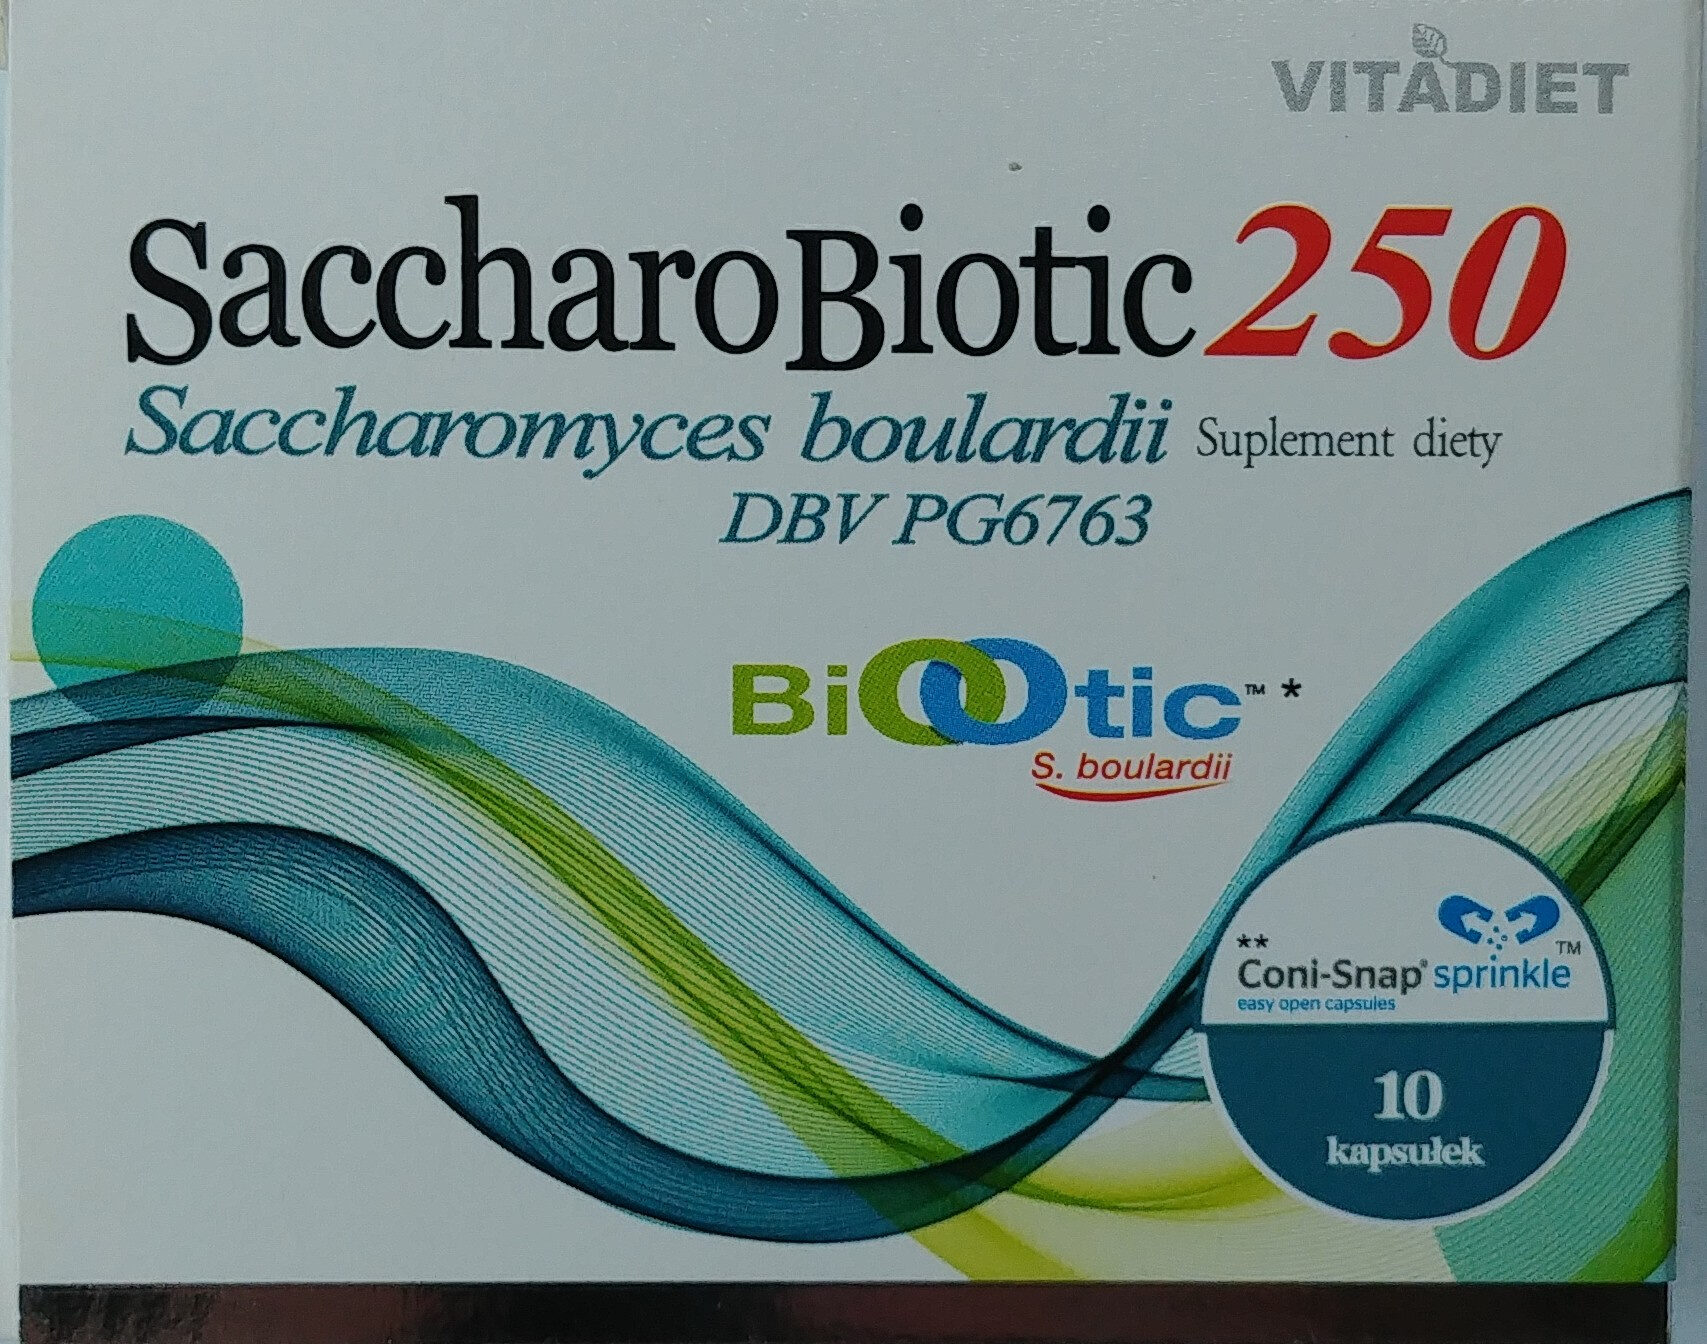 SaccharoBiotic 250 - Product - pl